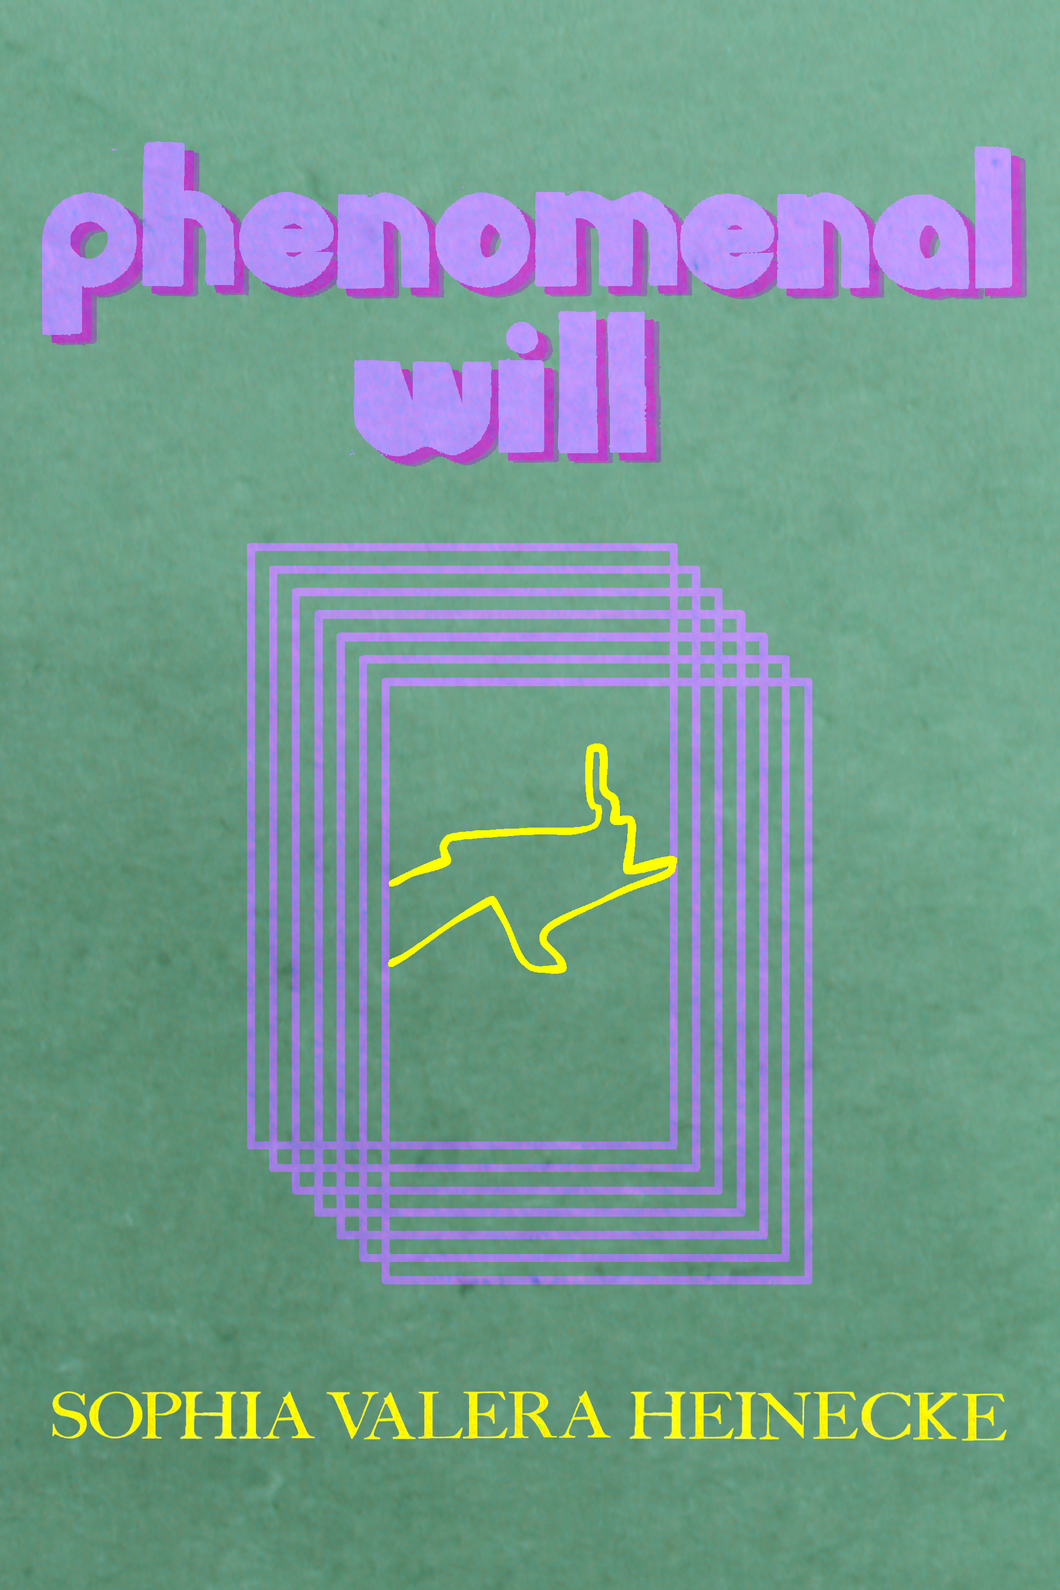 Phenomenal Will: A Dialogue of Self, by Sophia Valera Heinecke-Print Books-Bottlecap Press